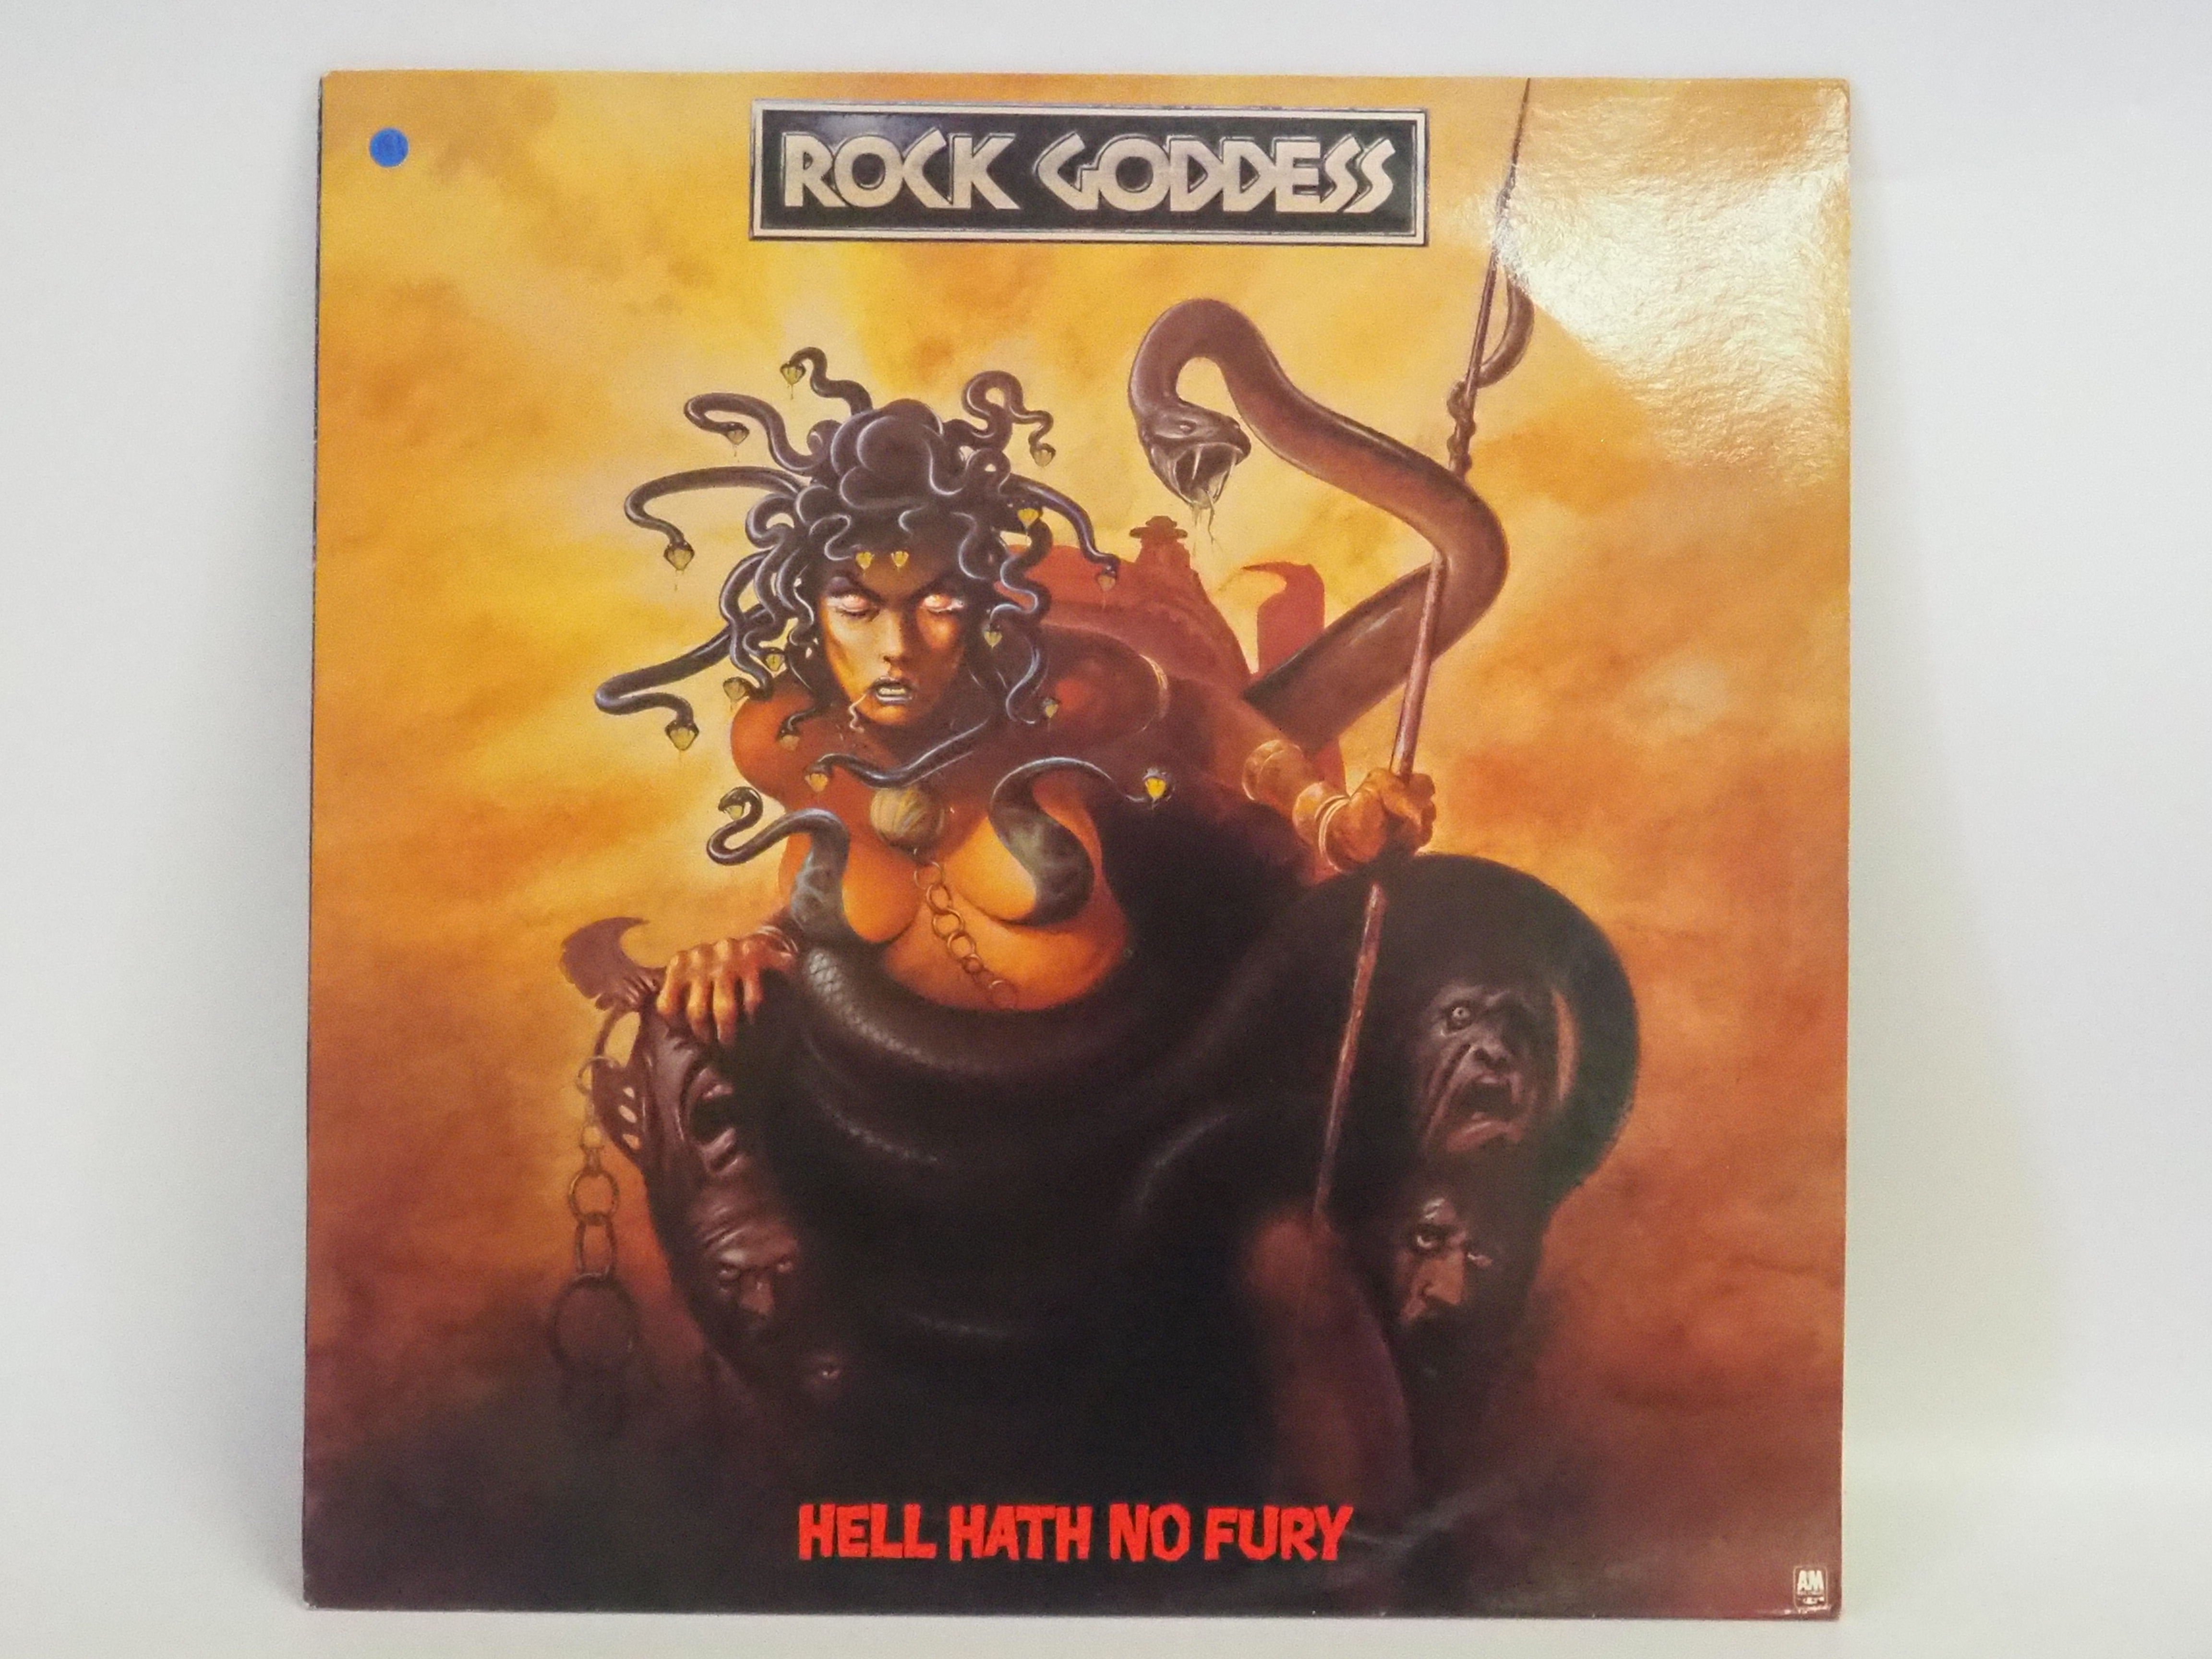 Rock Goddess - Hell Hath No Fury 12"vinyl Album